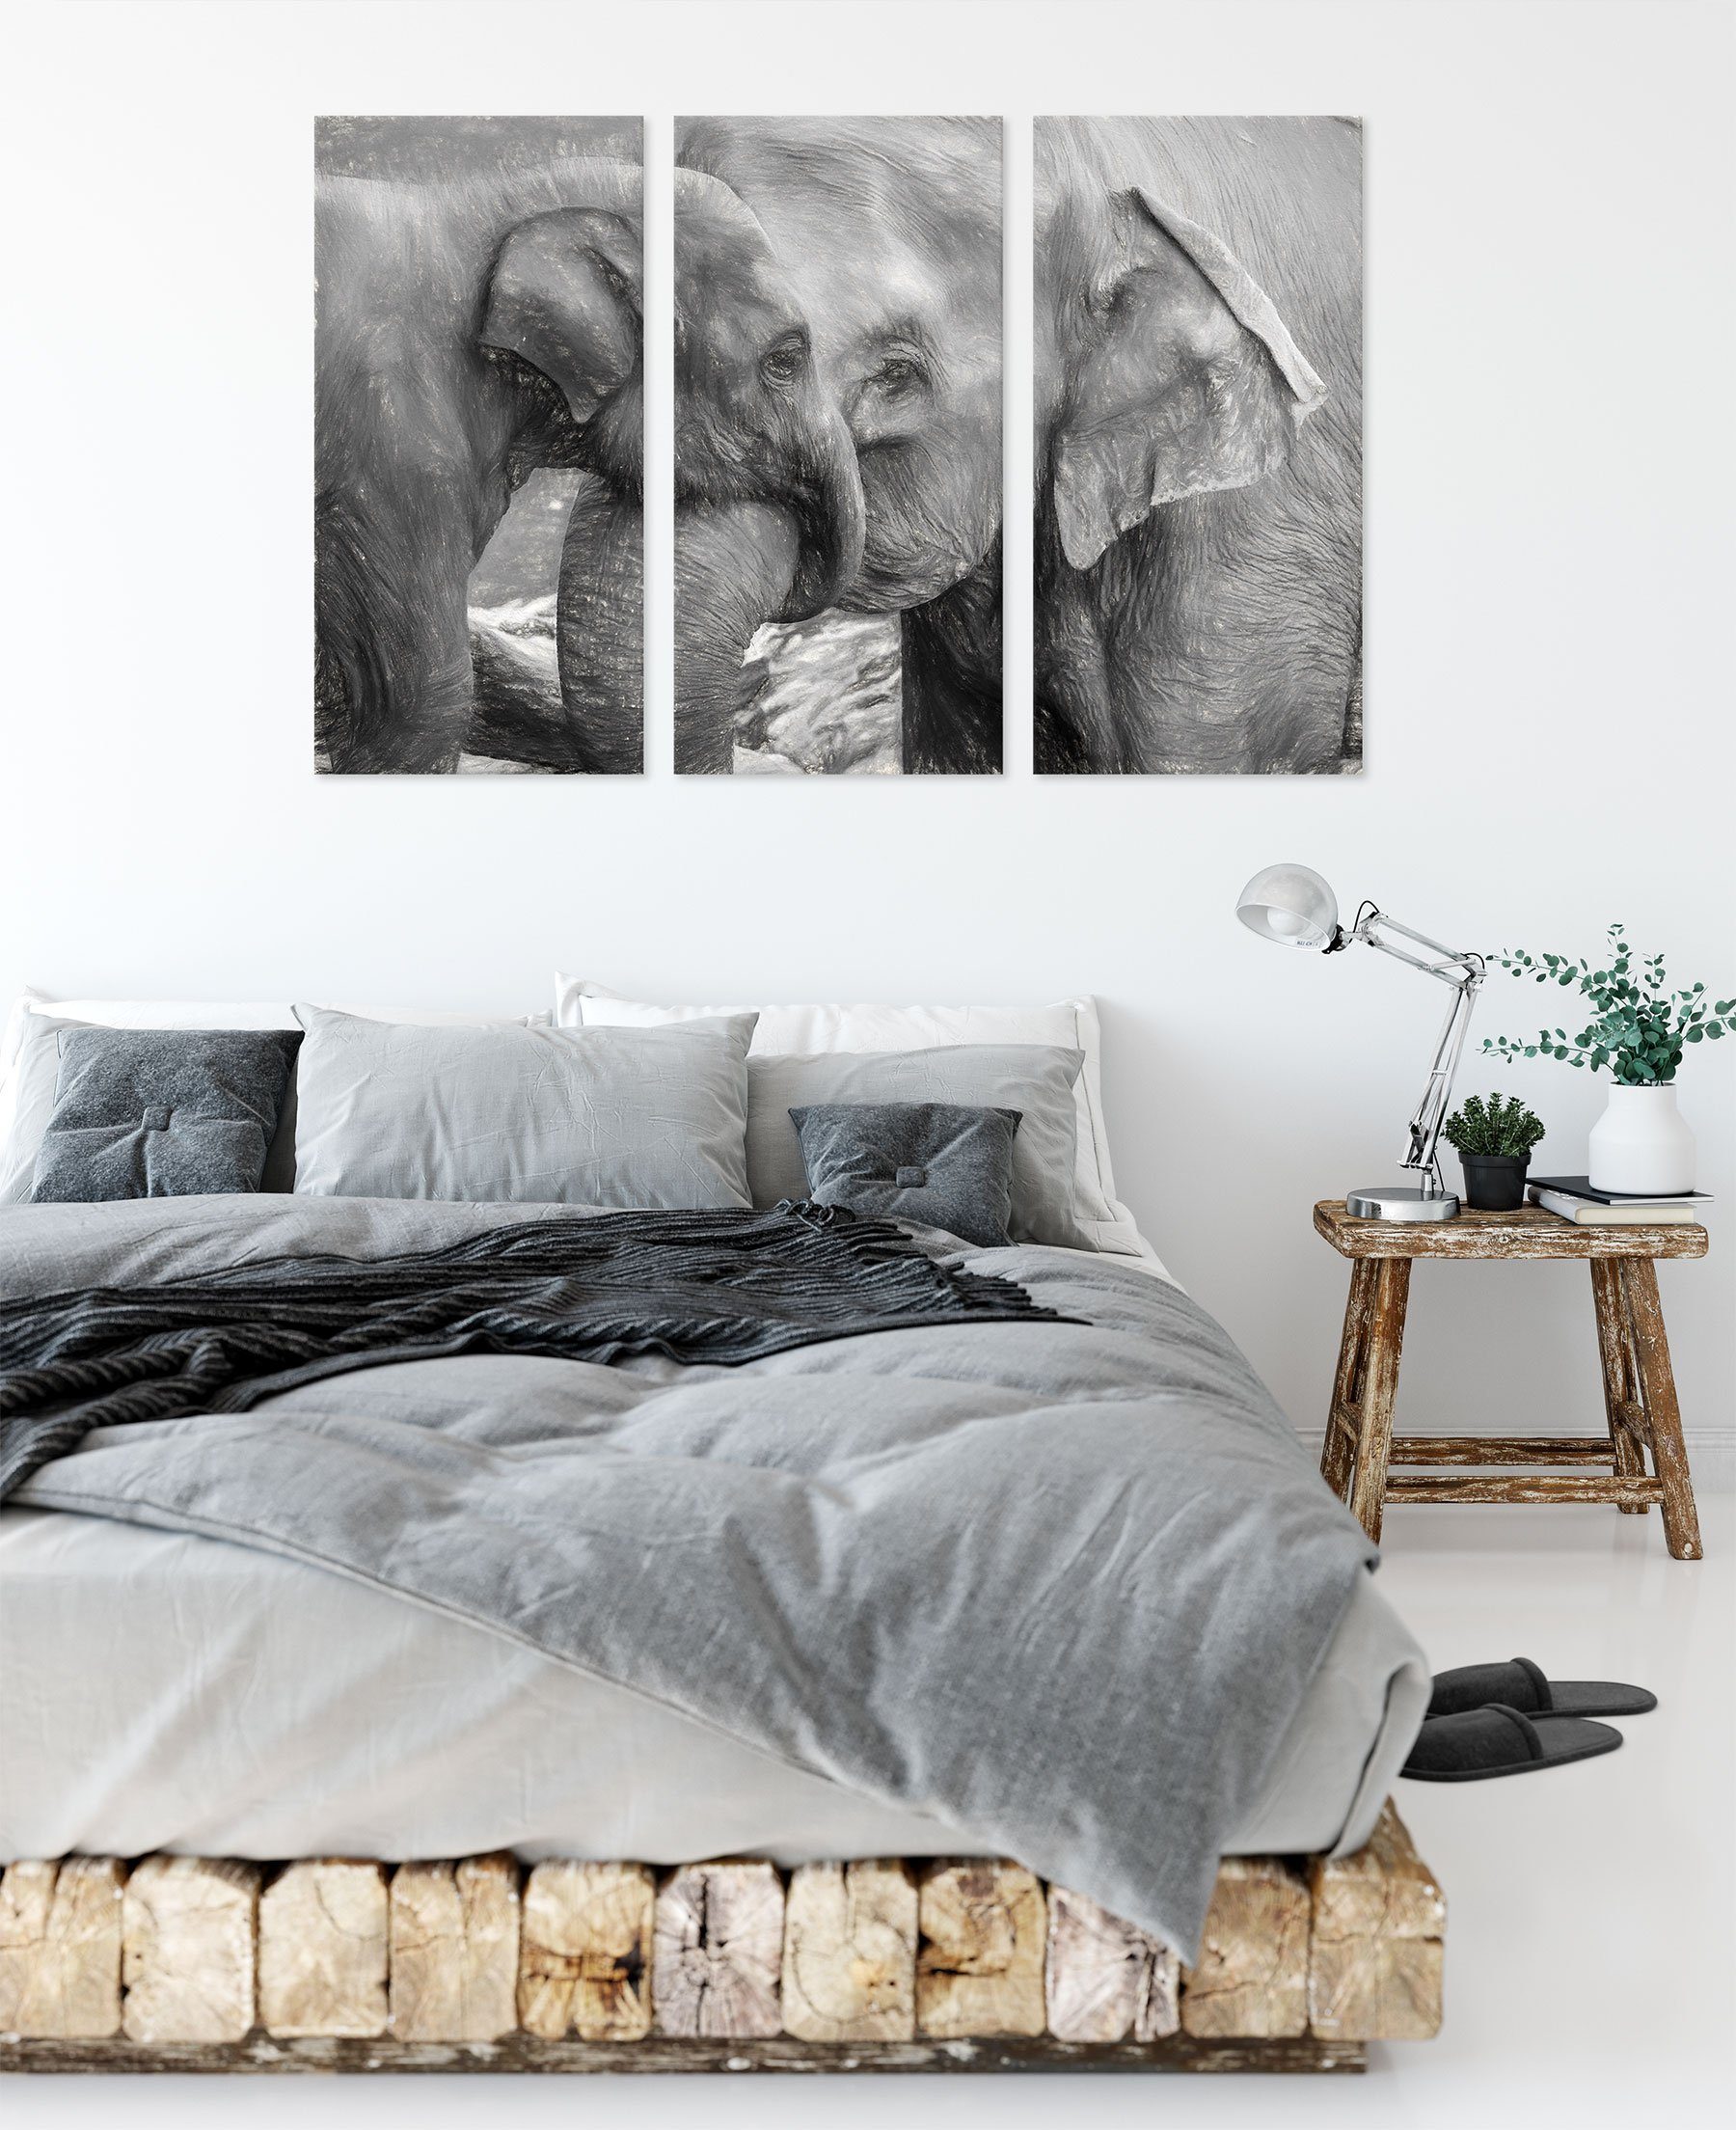 Pixxprint Leinwandbild Elefantenmutter St), mit Kalb inkl. Kalb, mit Zackenaufhänger 3Teiler (120x80cm) bespannt, (1 fertig Leinwandbild Elefantenmutter